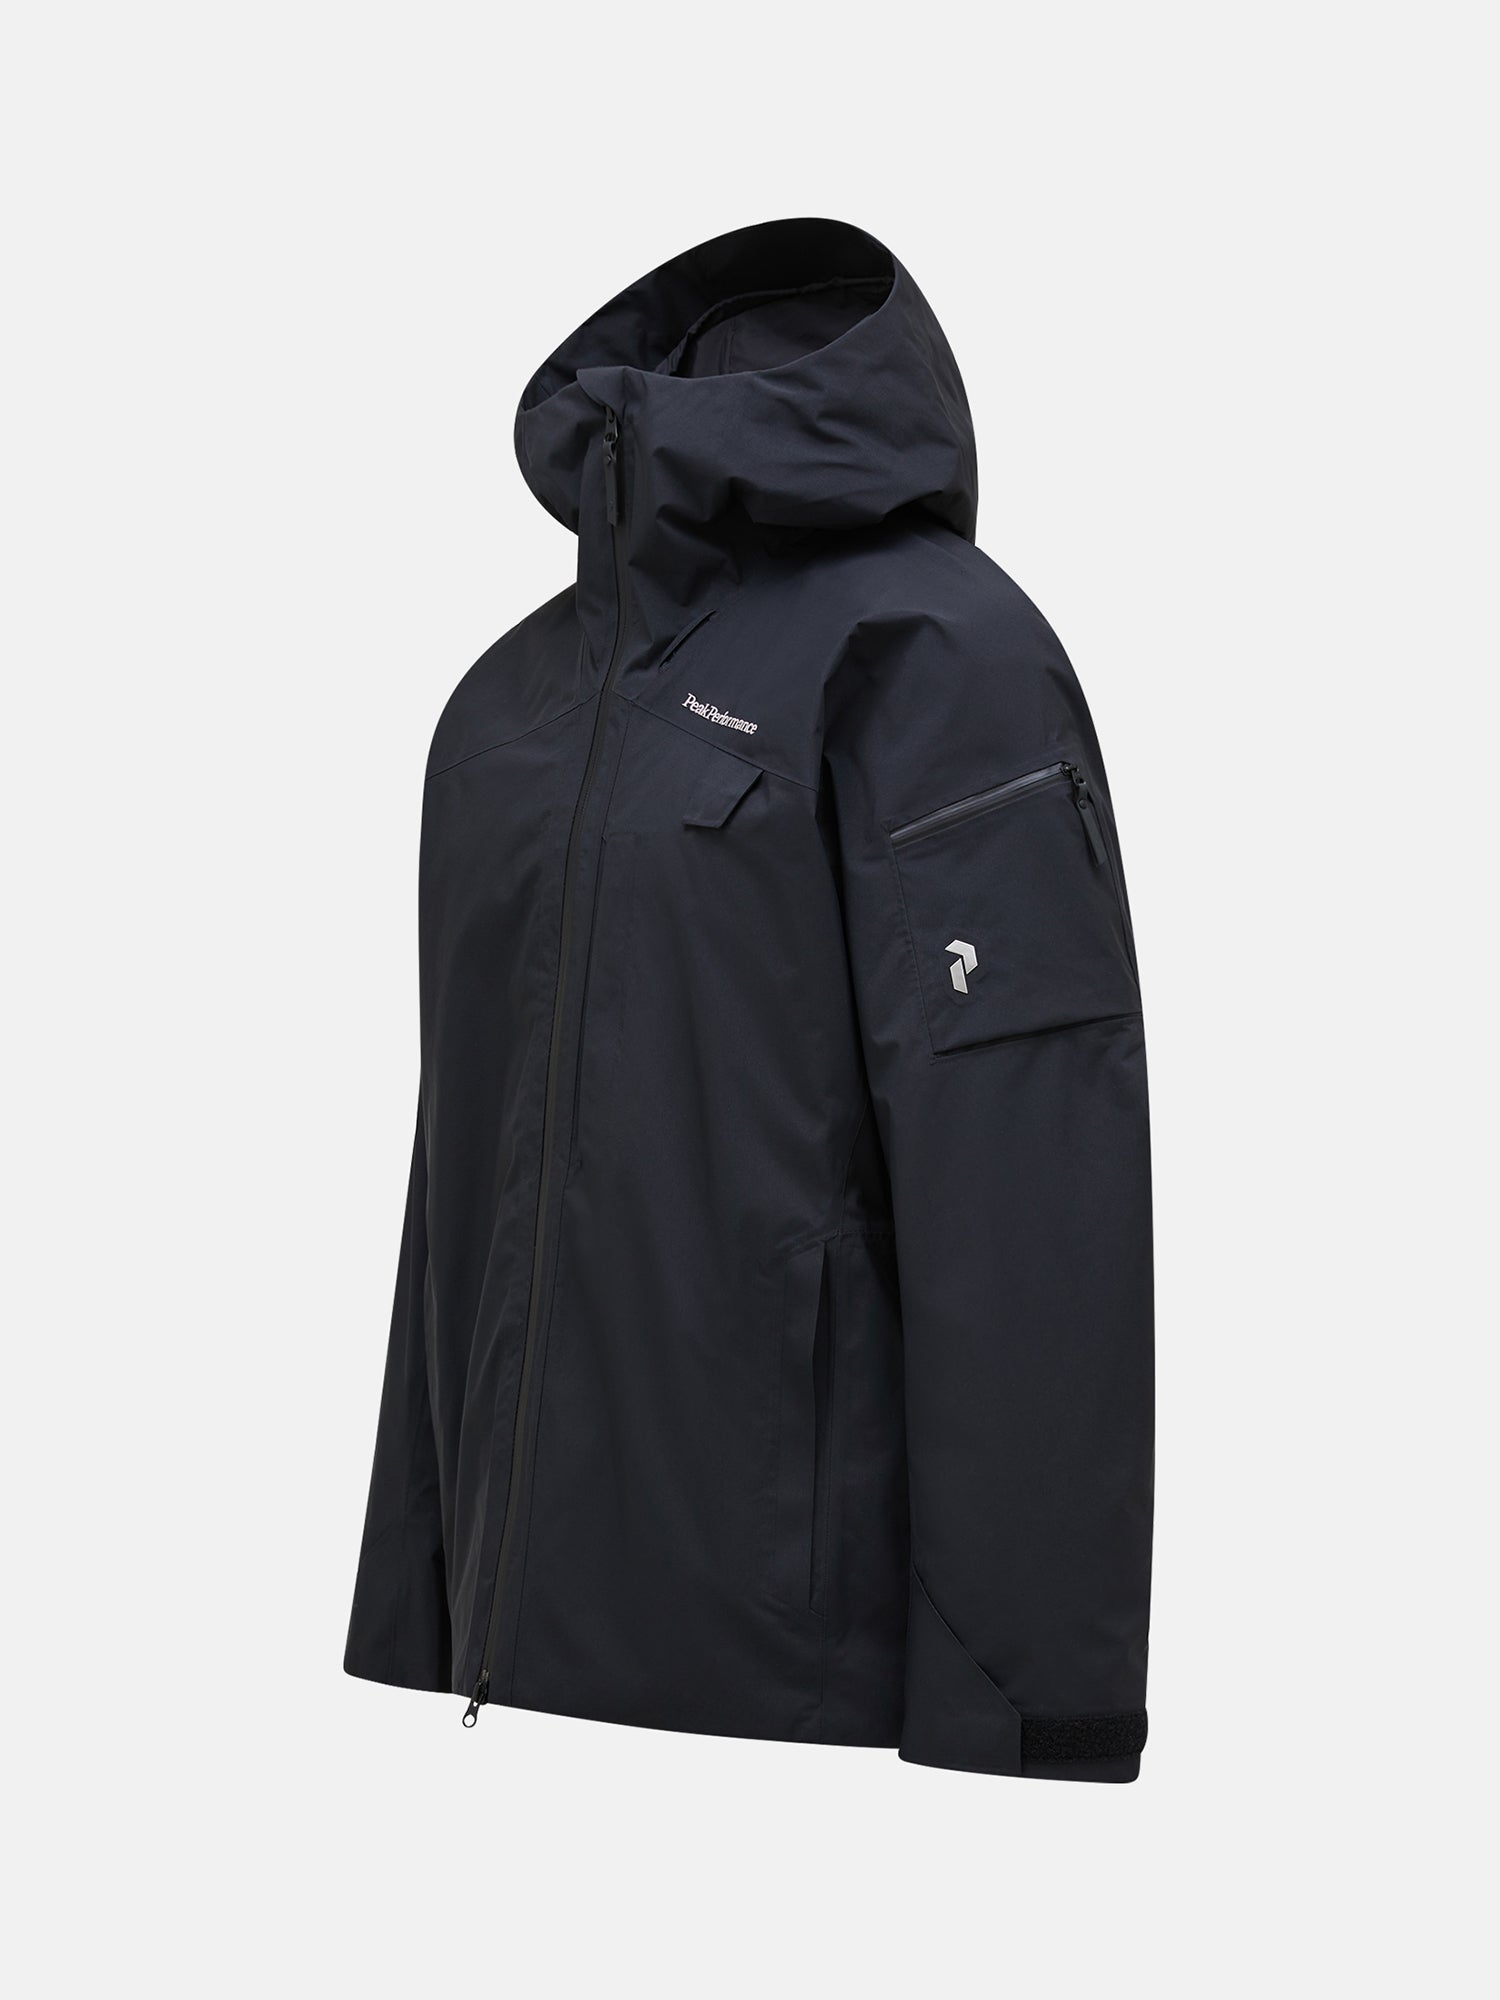 【PeakPerformance】M Alpine GORE-TEX 2L Jacket Black / M